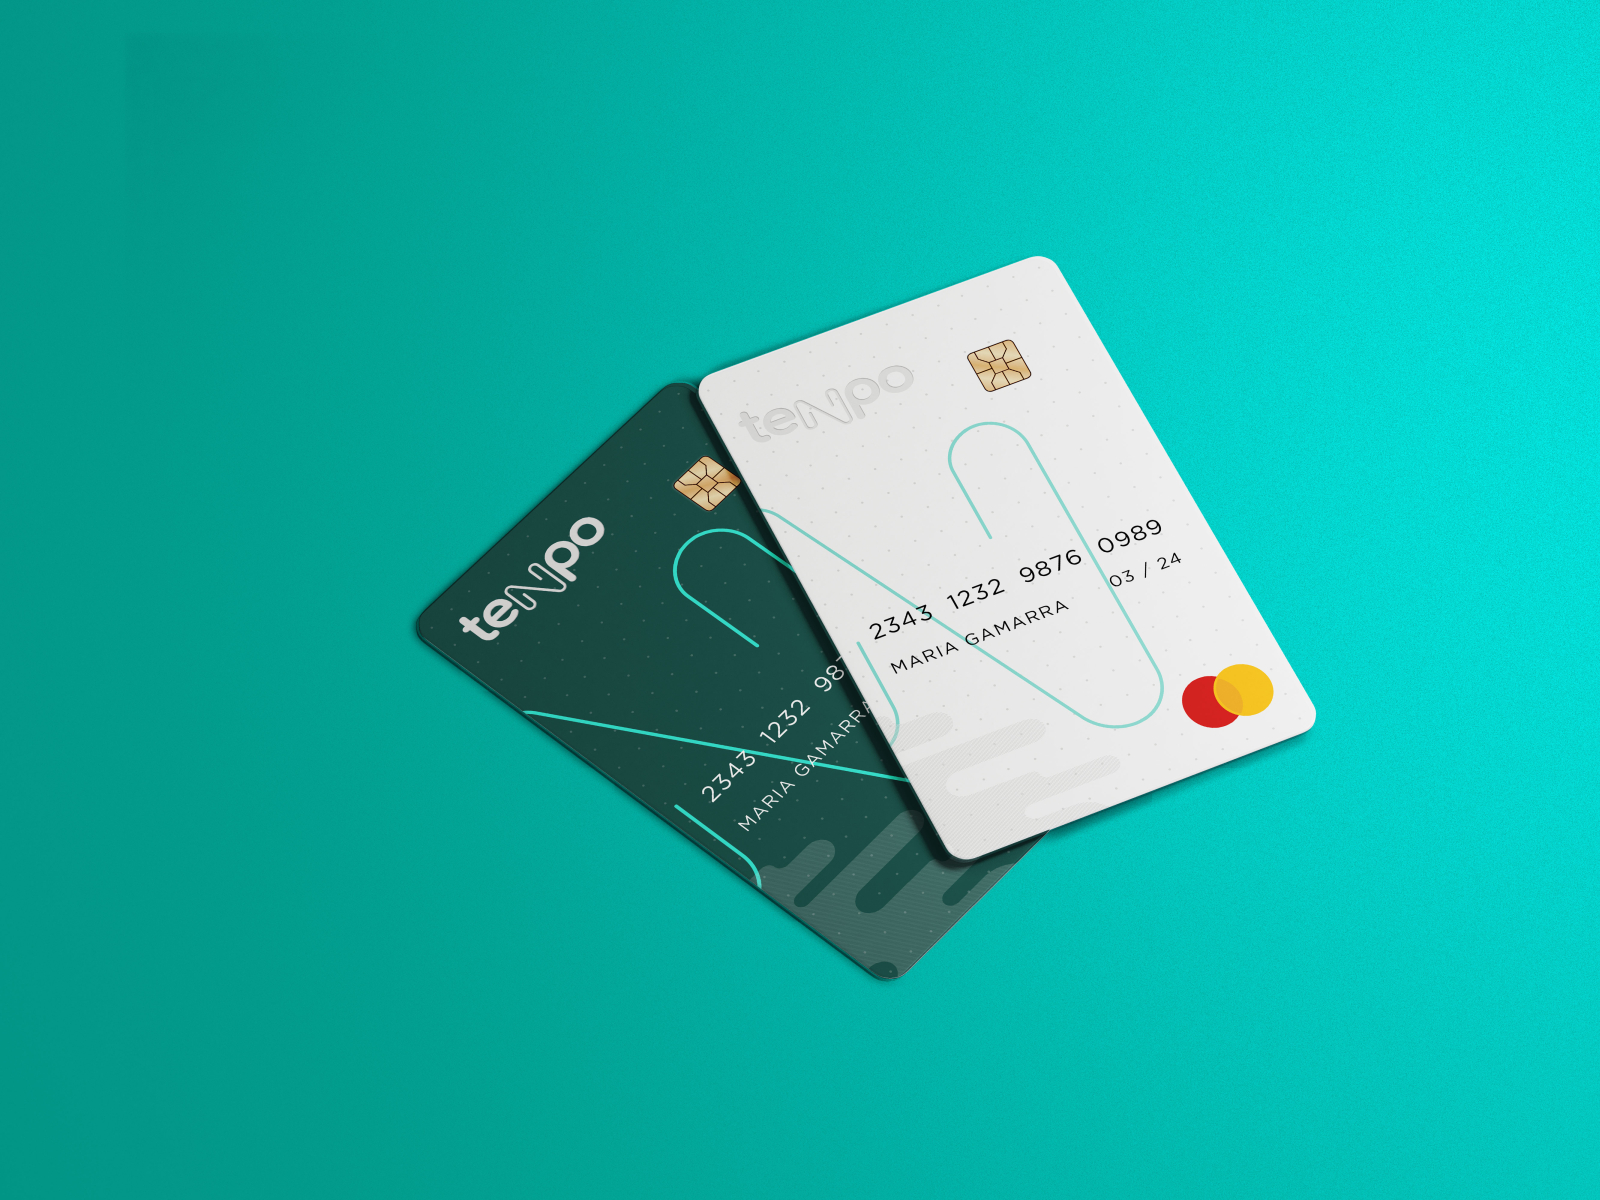 Leaked credit card information 2020